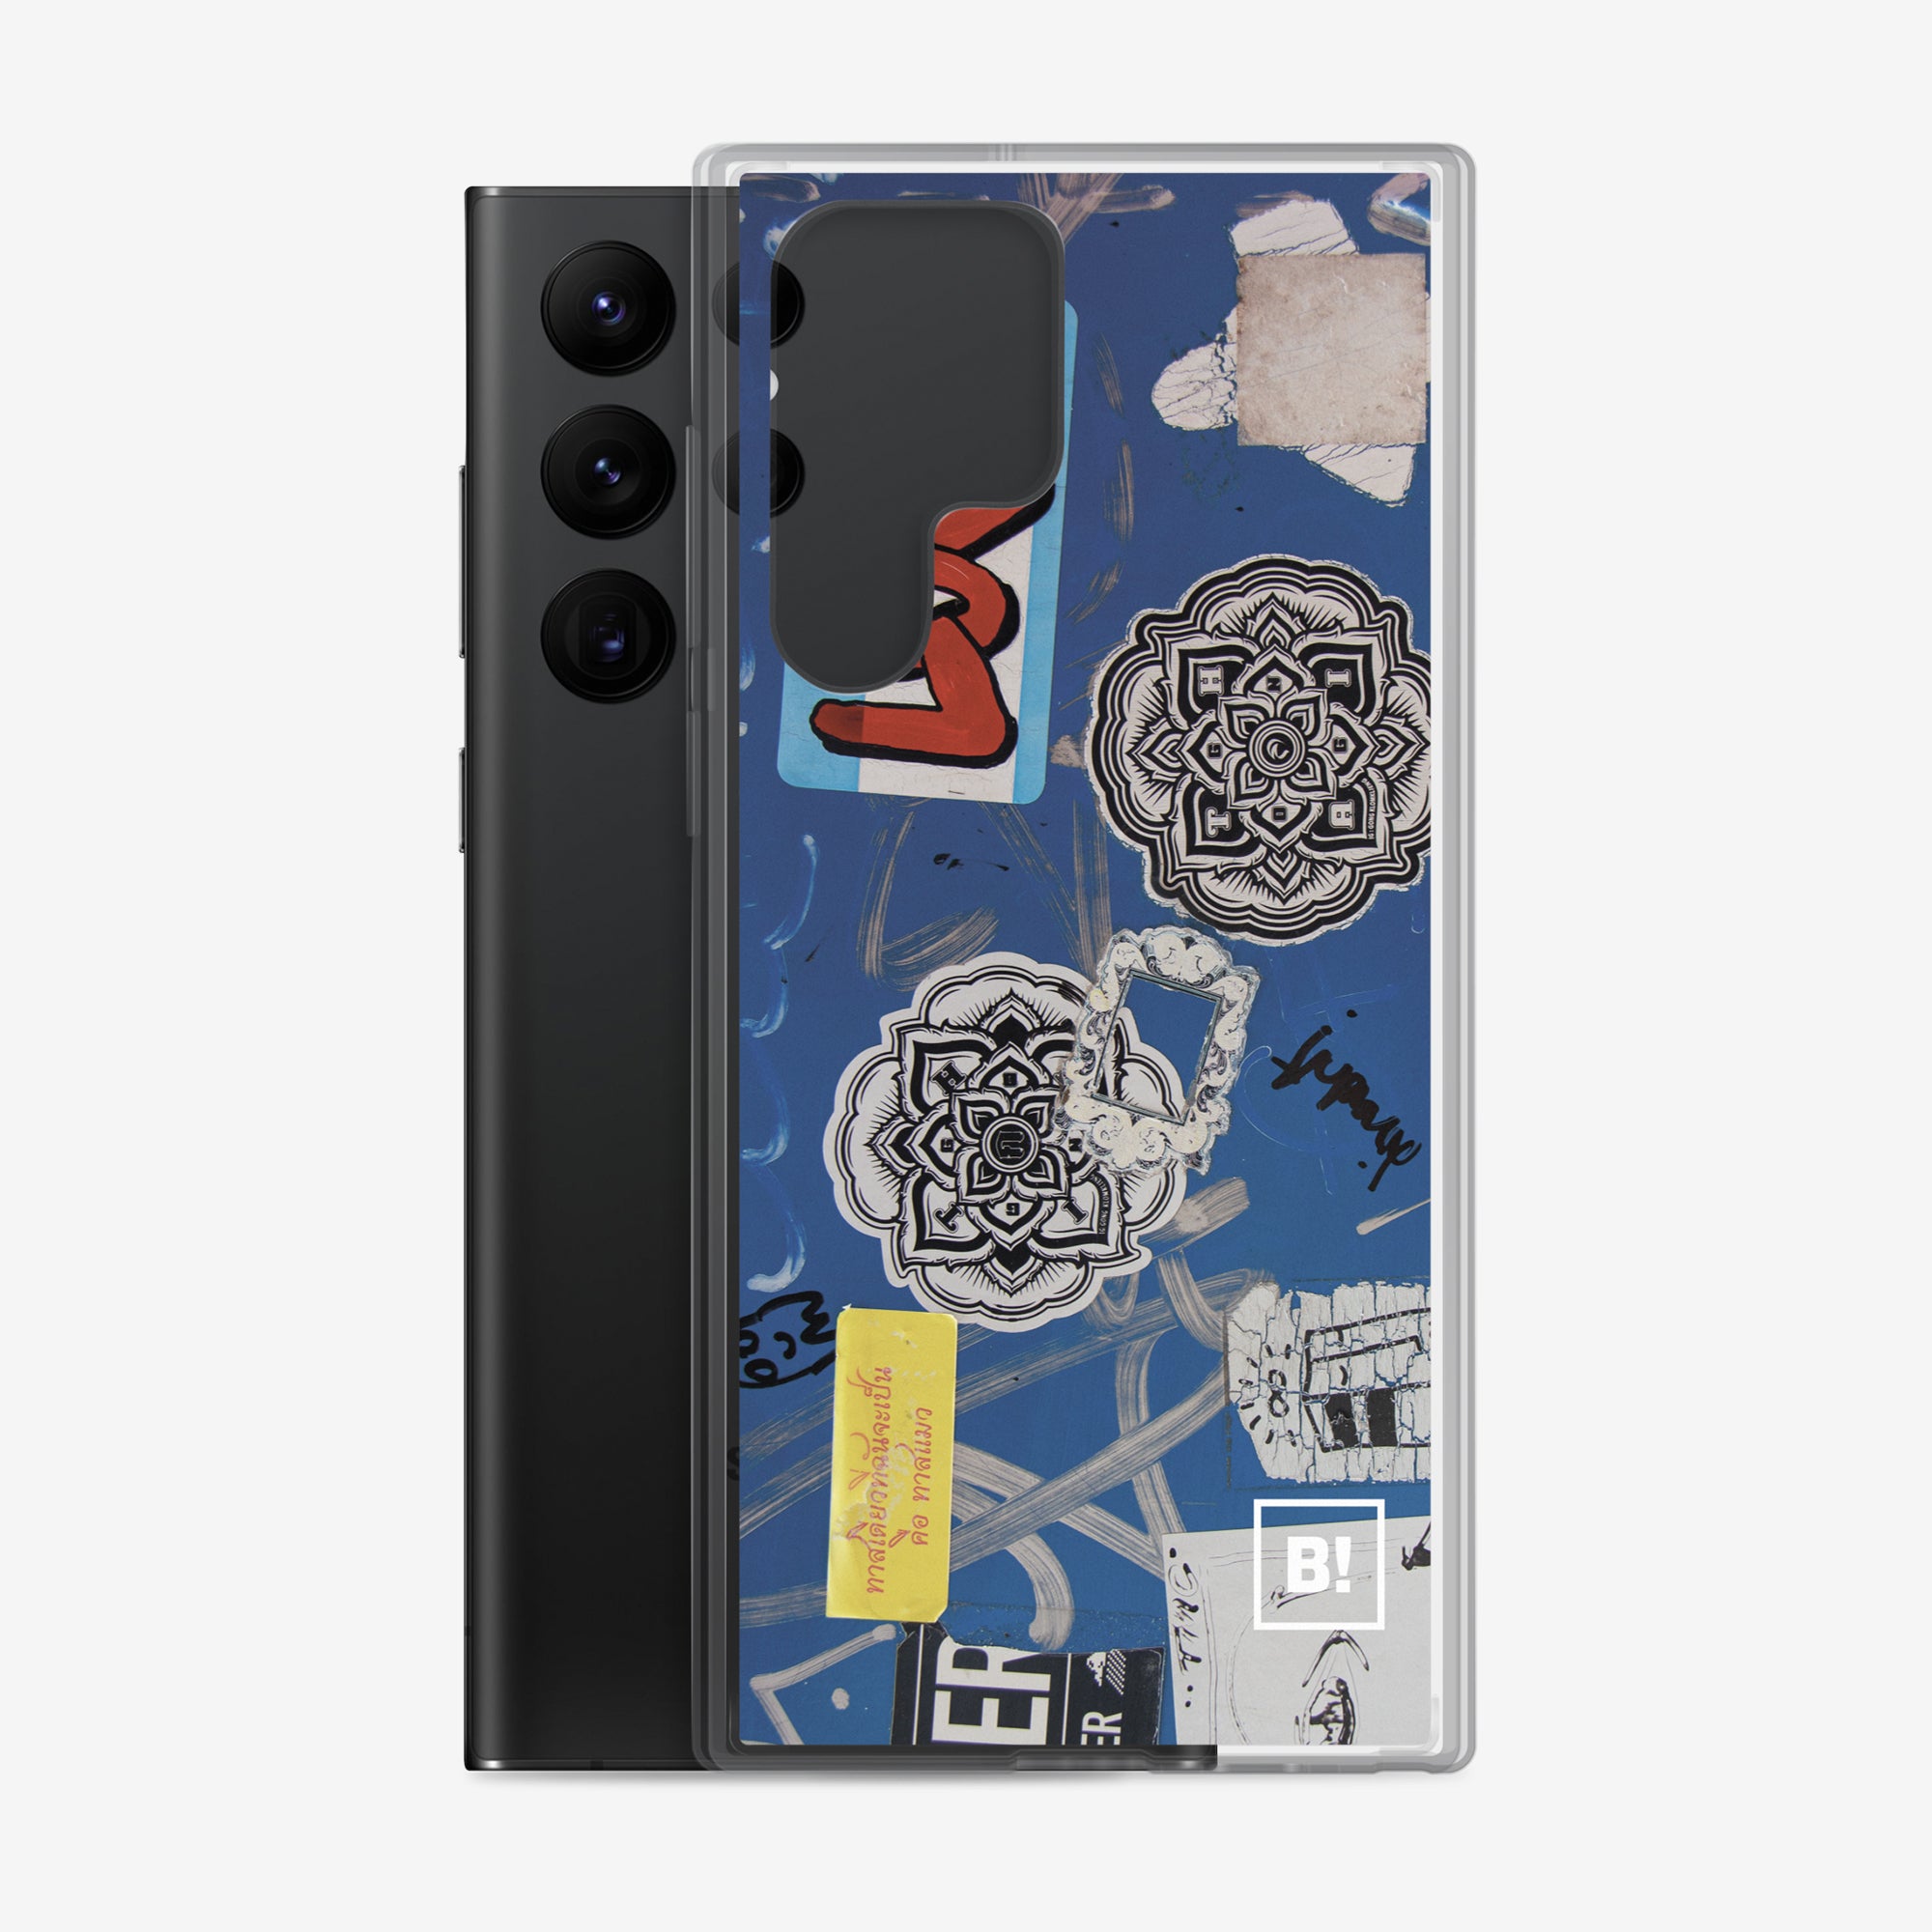 Binspired Leo Leo No1 Urban Art Samsung Galaxy s22 Ultra Case with Phone